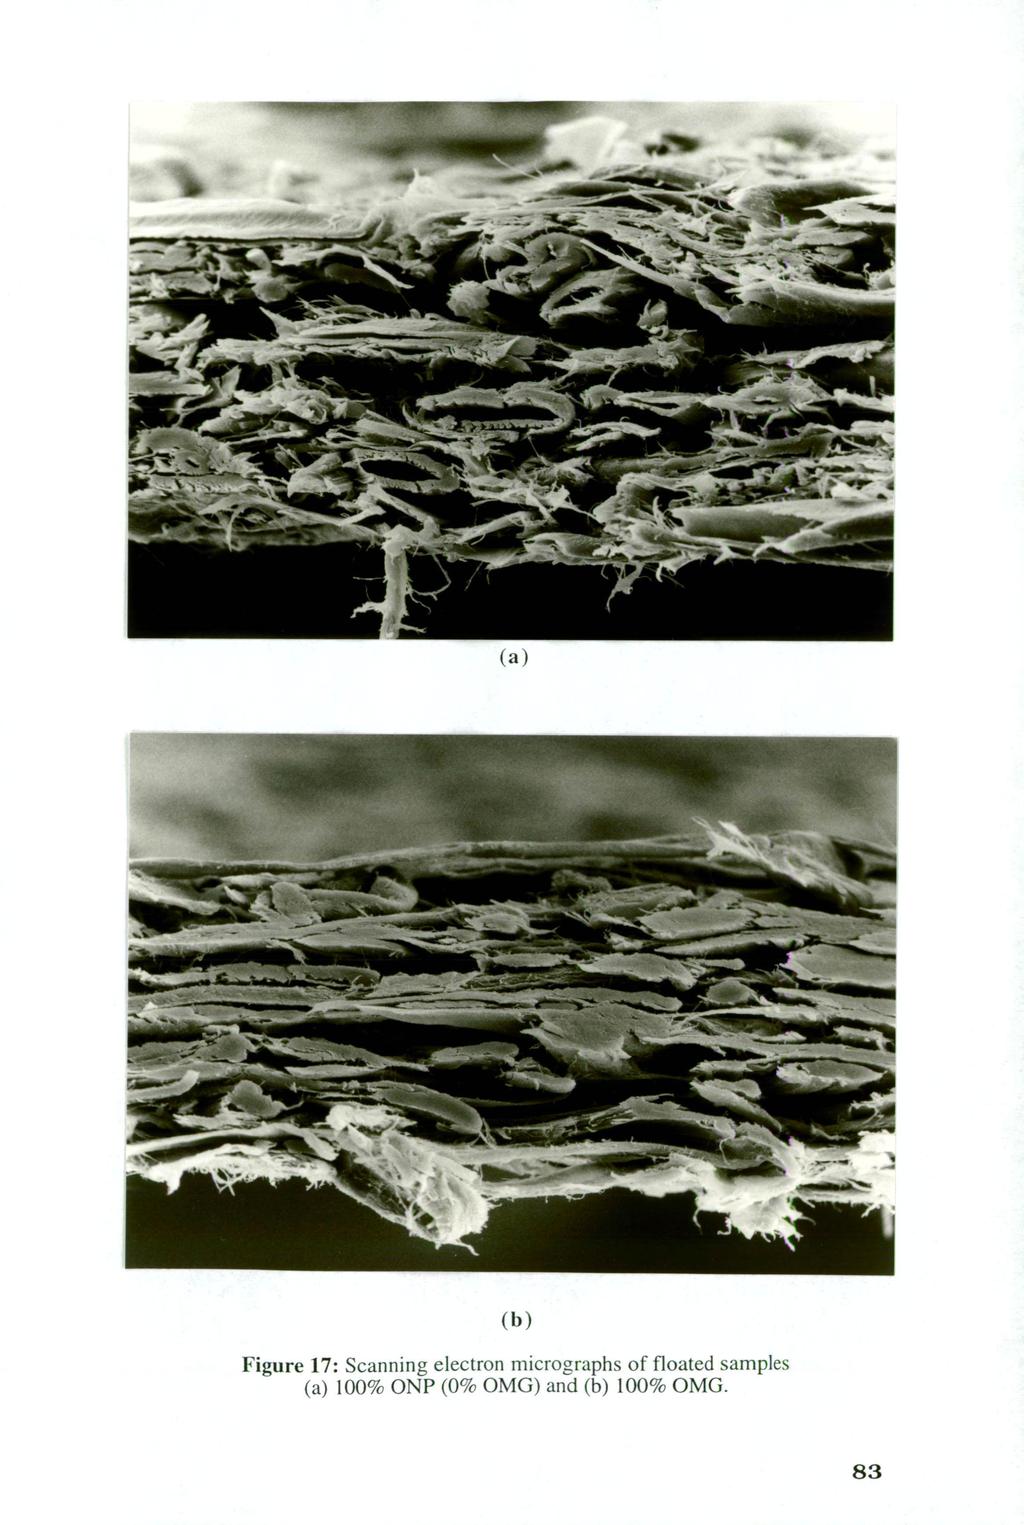 (b) Figure 17: Scanning electron micrographs of